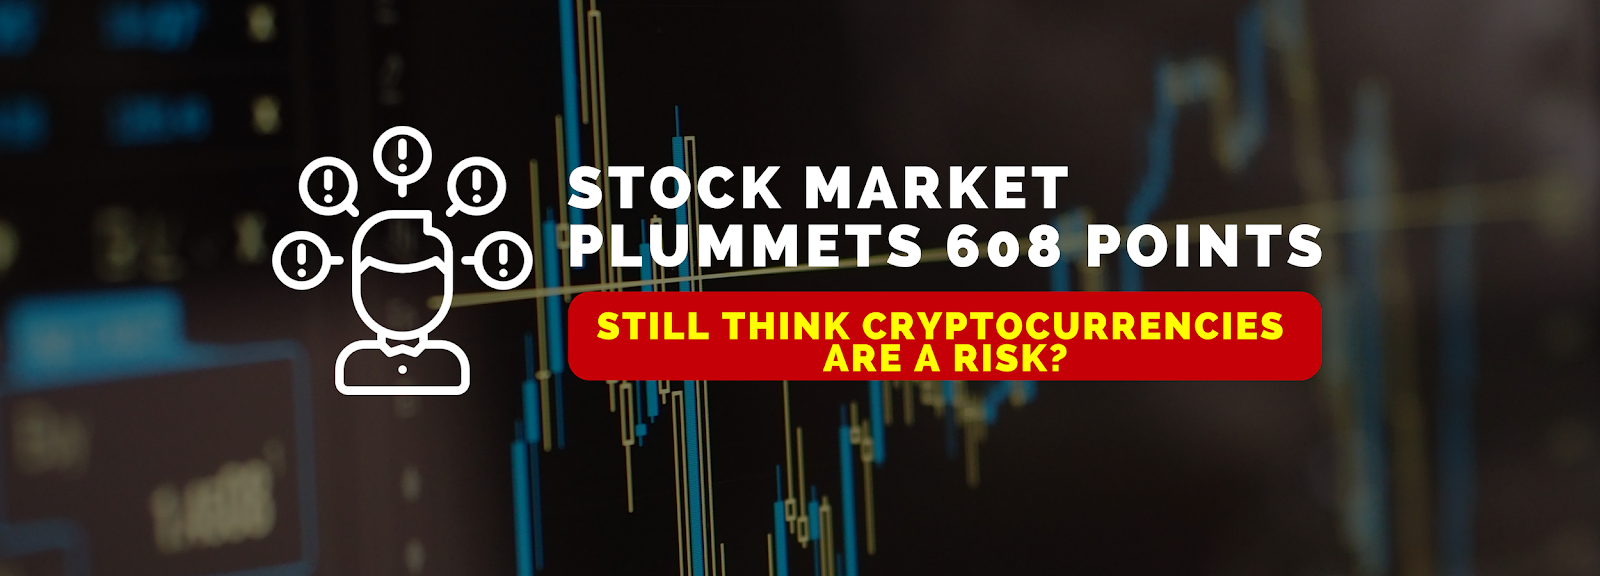 Stock Market Plummets 608 Points